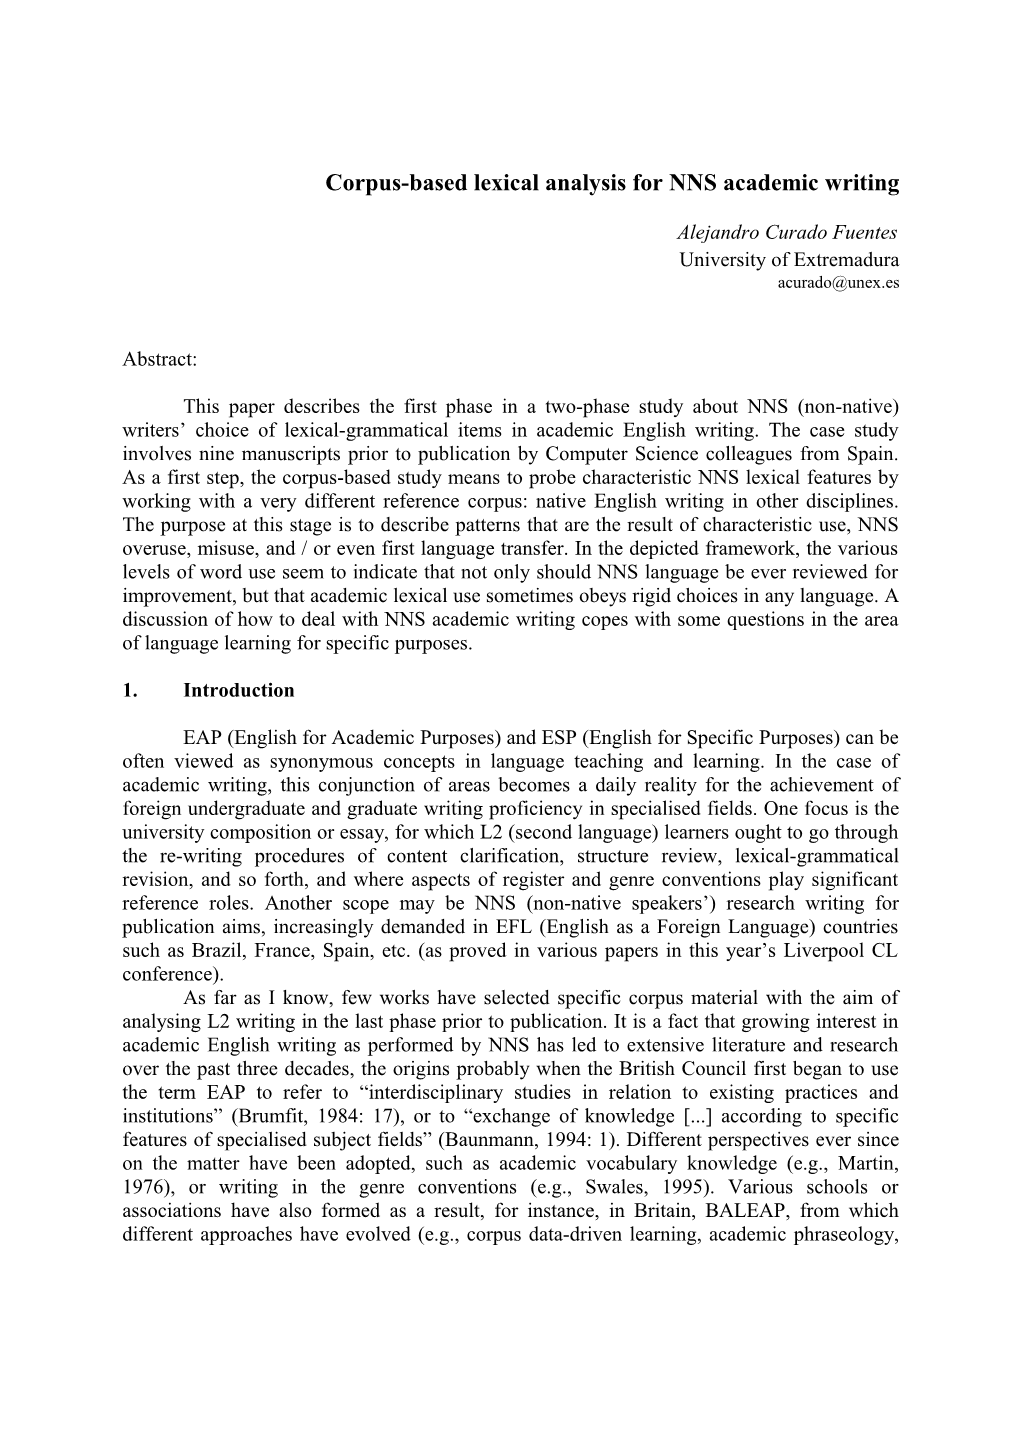 Corpus-Based Lexical Analysis for NNS Academic Writing